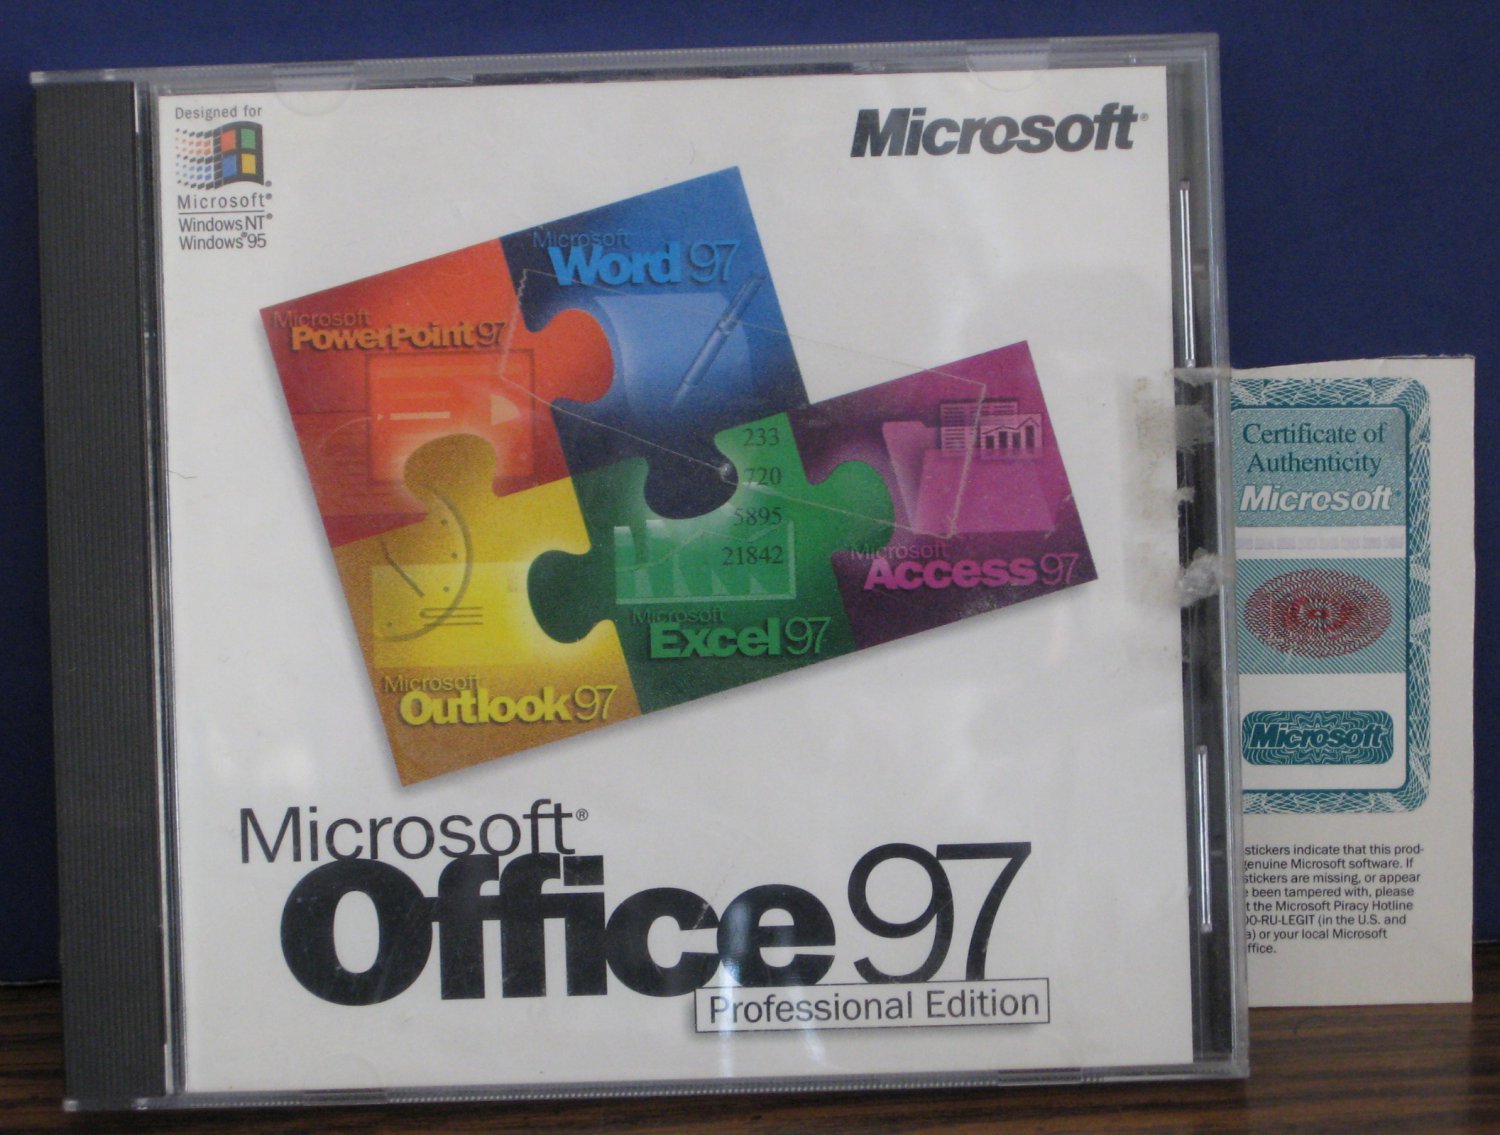 Microsoft Office 97 Professional - Retail - 1996 Vintage